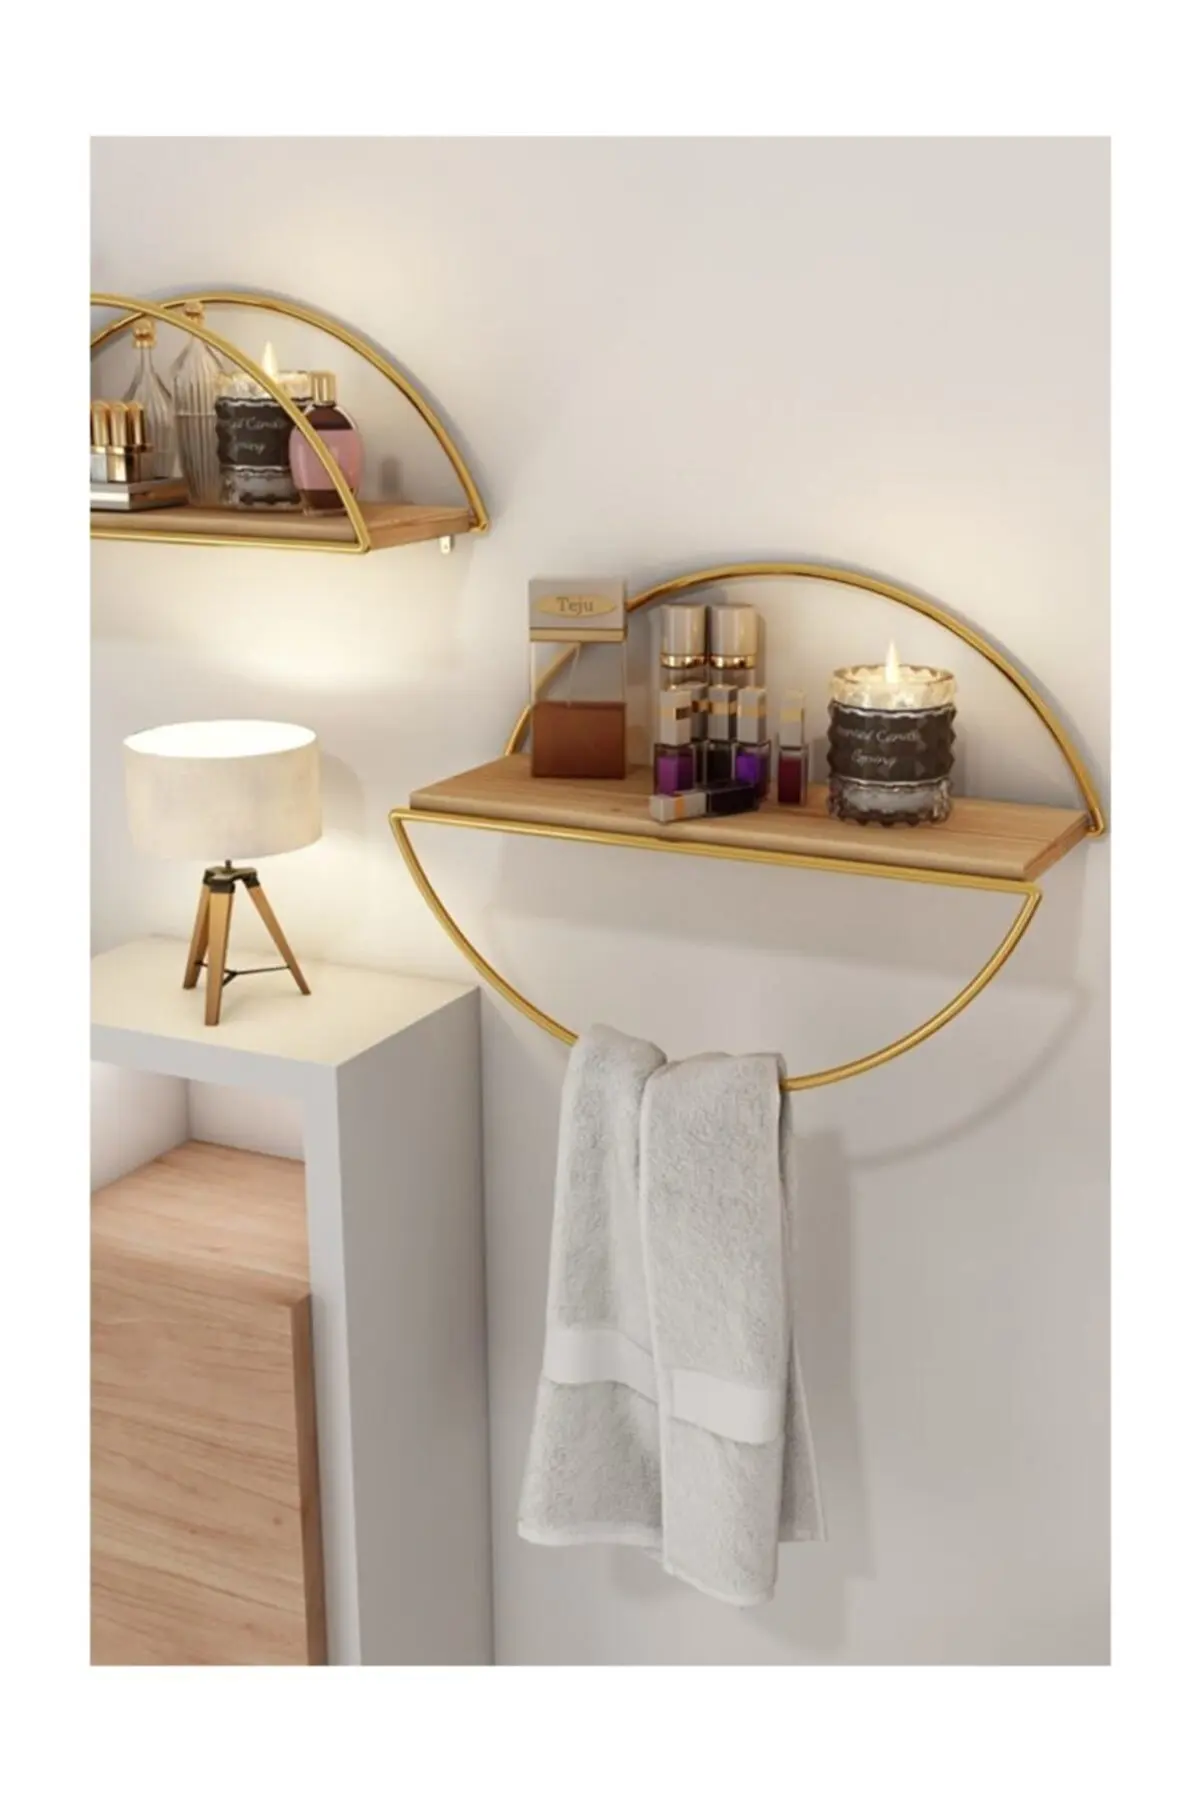 Bino Wall Shelf Decorative Kitchen Bathroom Golden Ellipse Bookshelf Towel Holder Perfect Design Quality